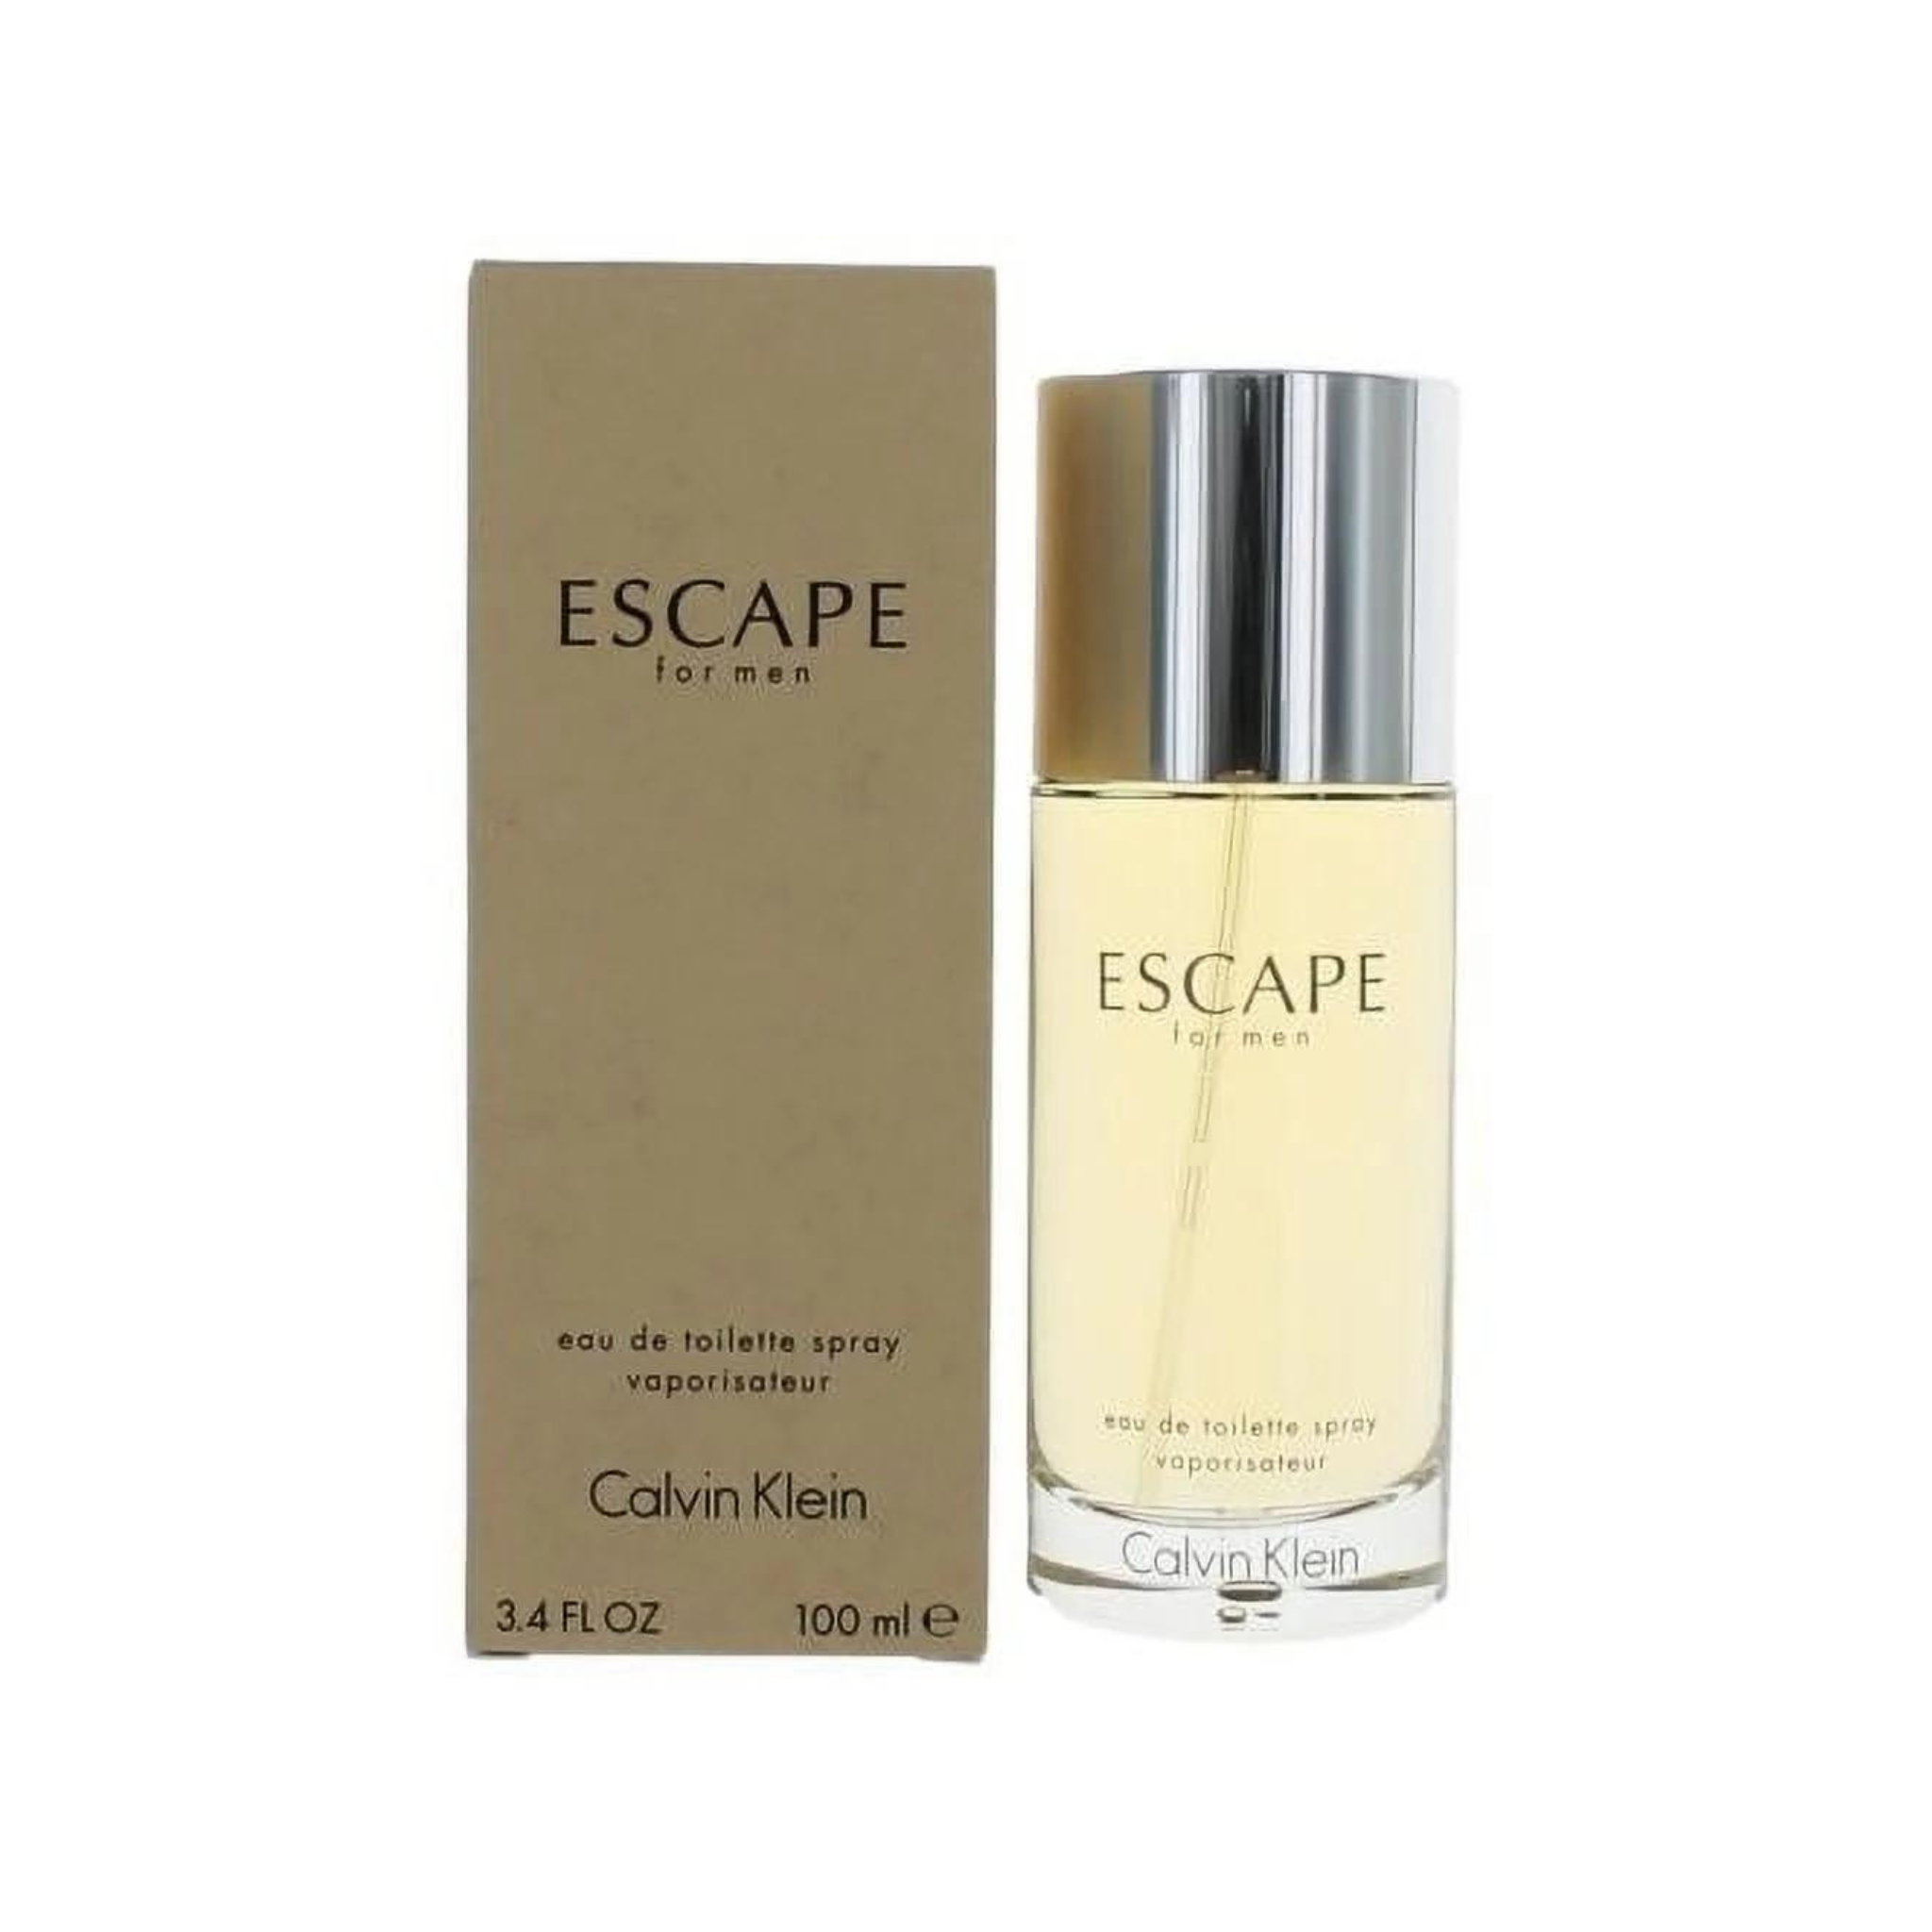 3.4-Oz Calvin Klein Escape Eau de Toilette Spray Cologne for Men